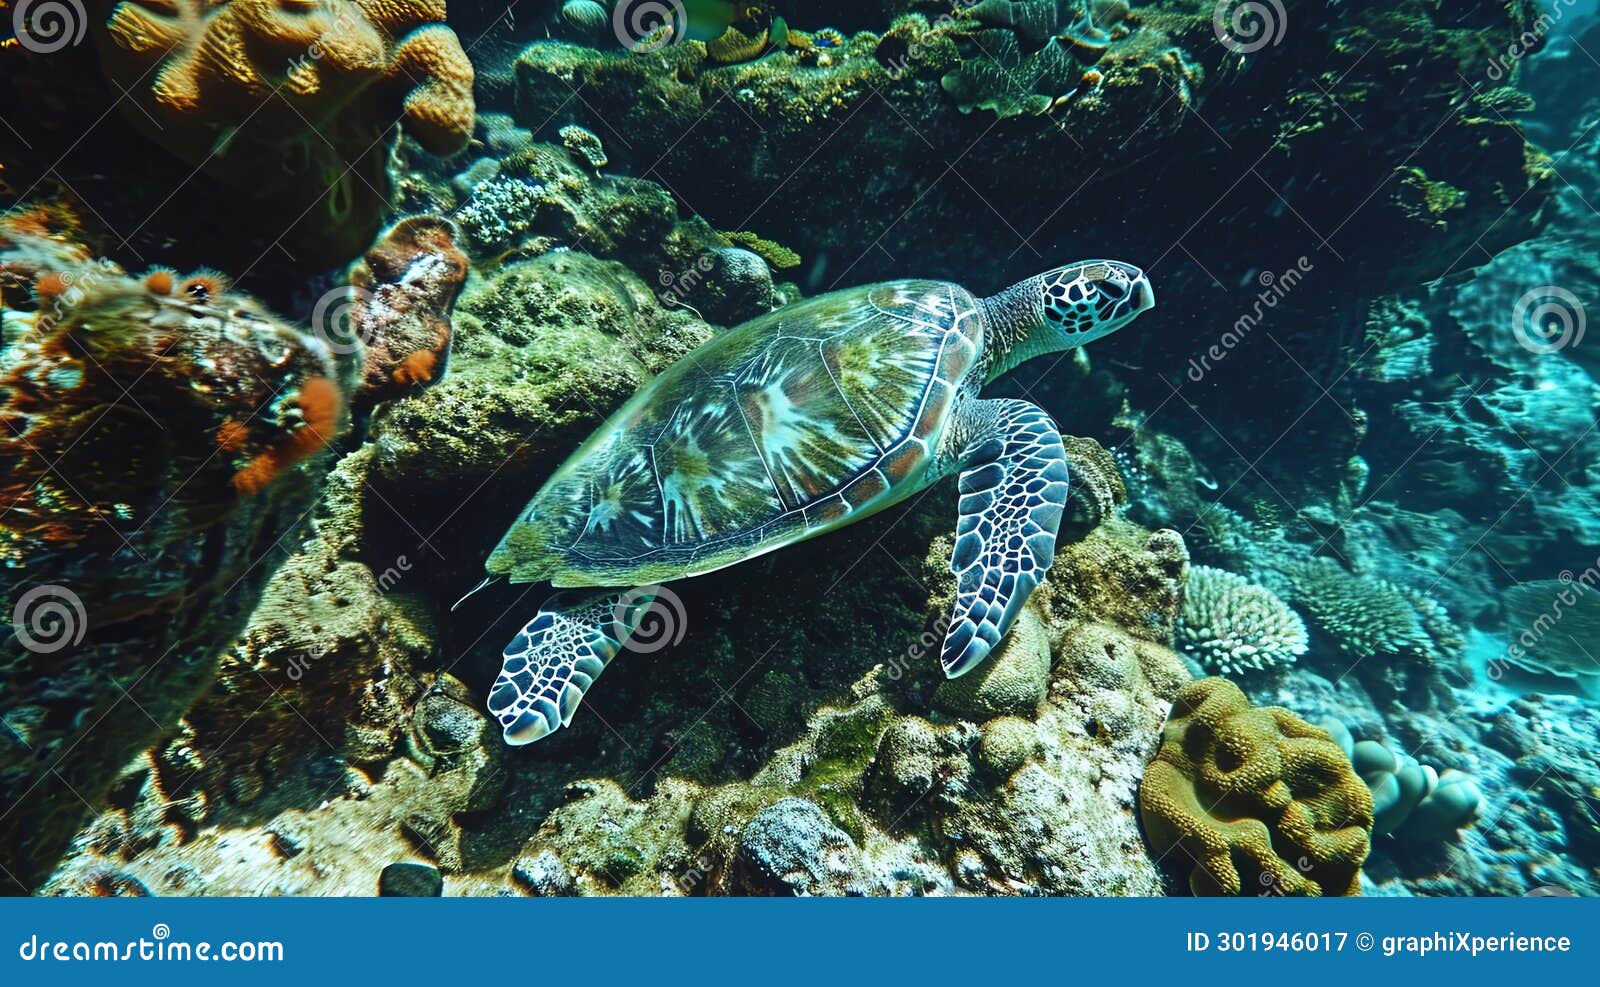 Cinematic Underwater Great Barrier Reef Scene Stock Illustration ...